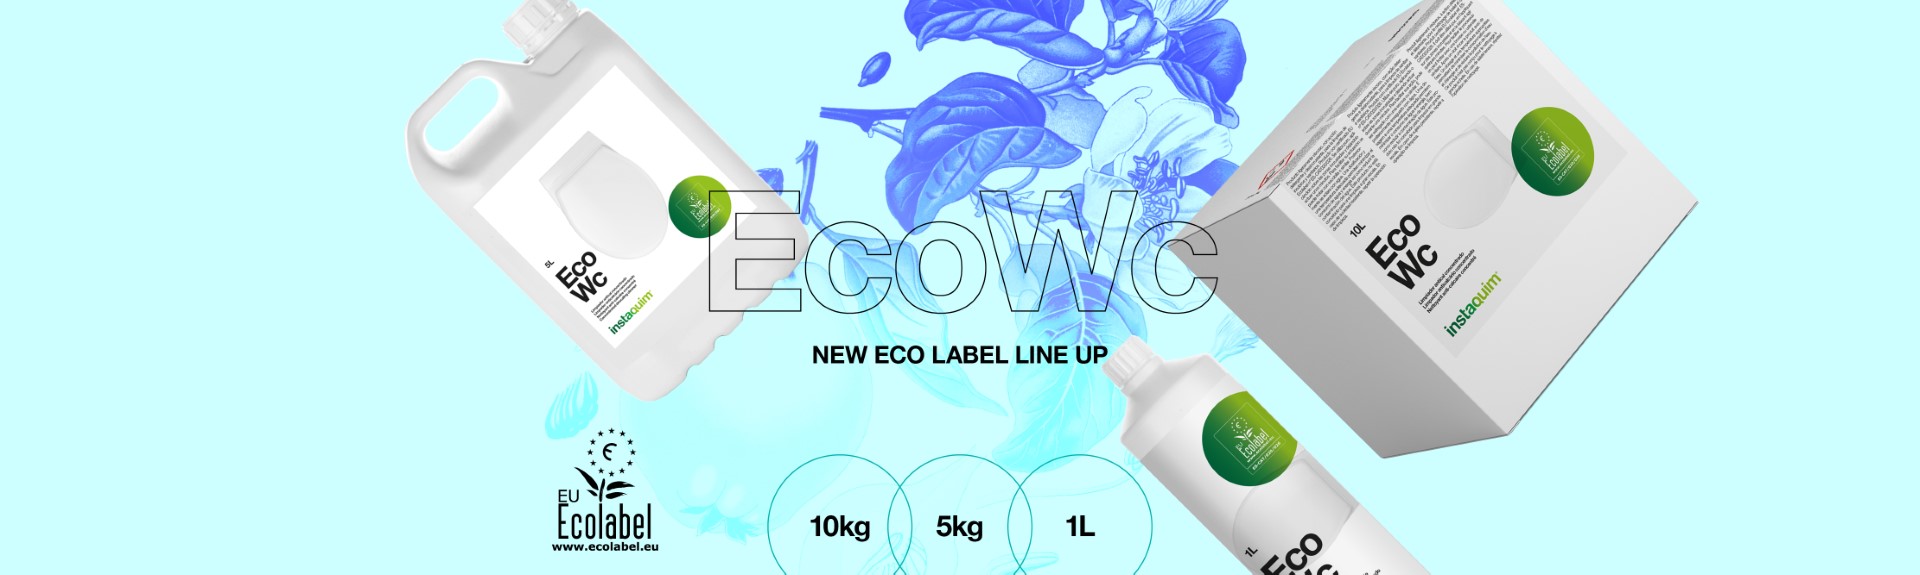 EcoWc